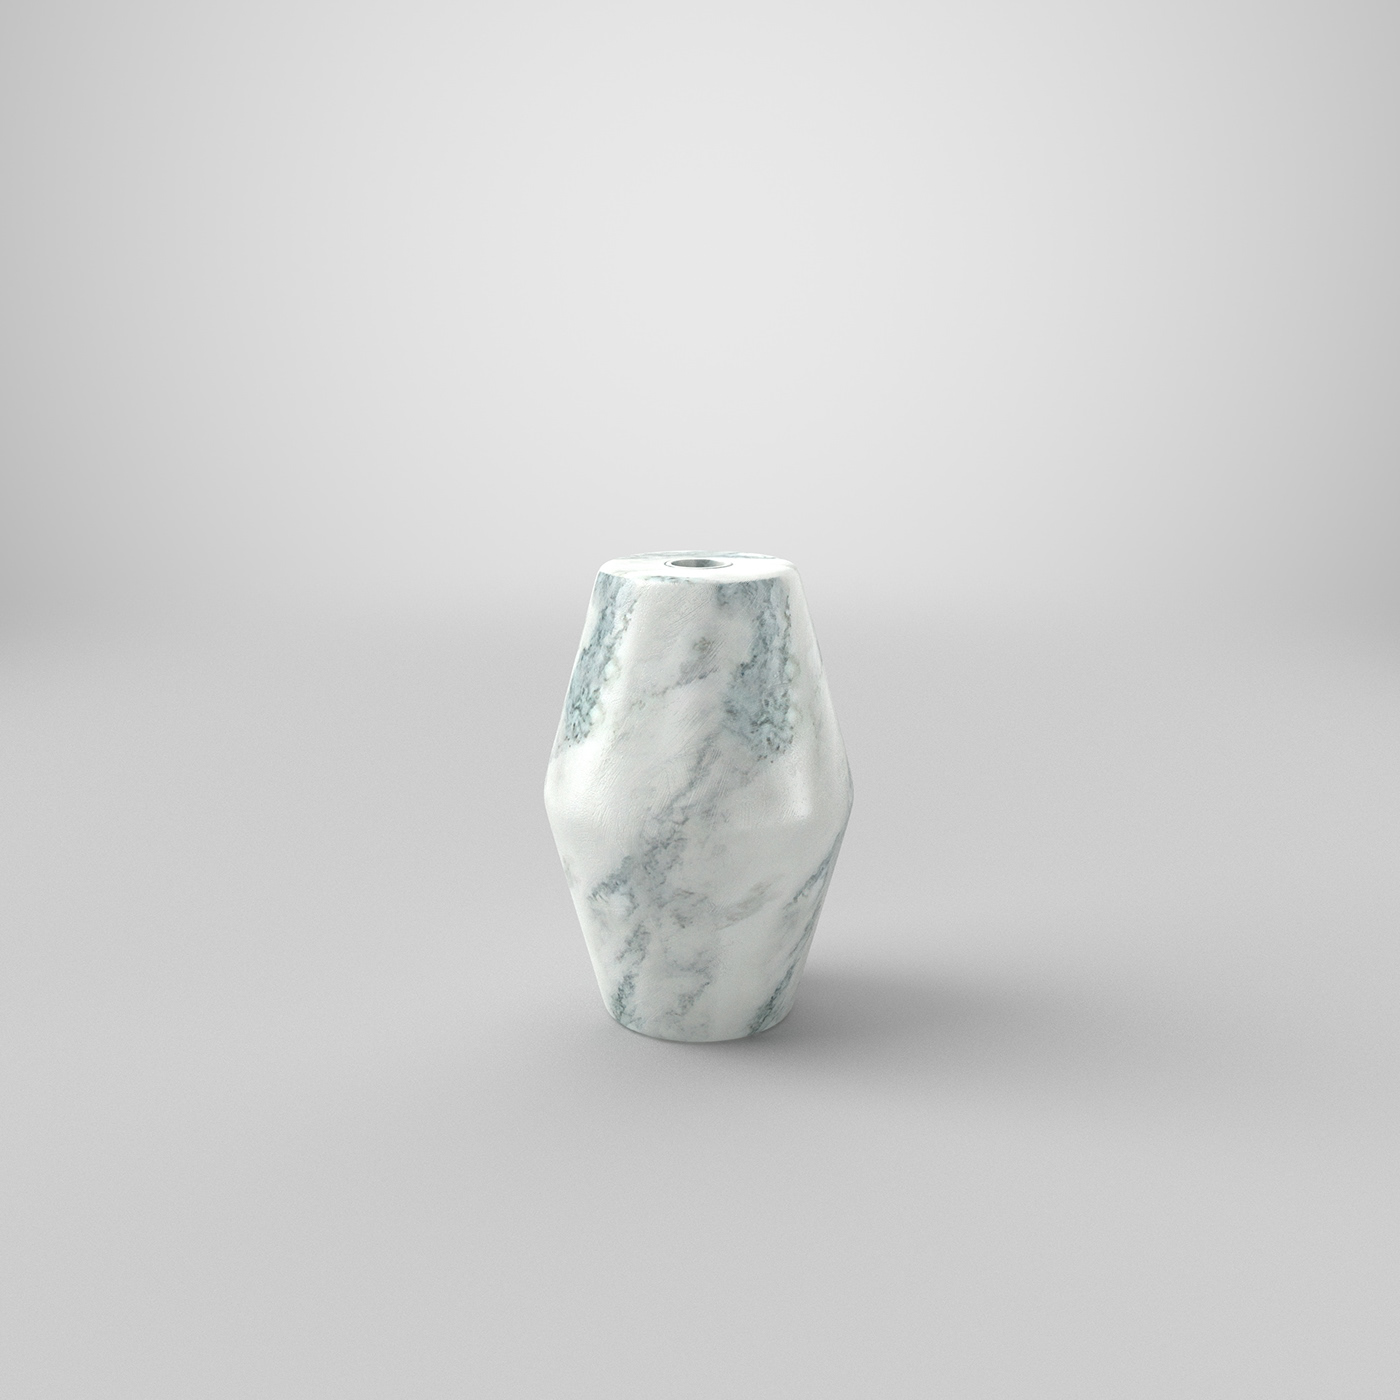 3D 3d modeling 3ds max CGI interior design  modeling product design  texturing Vase vases